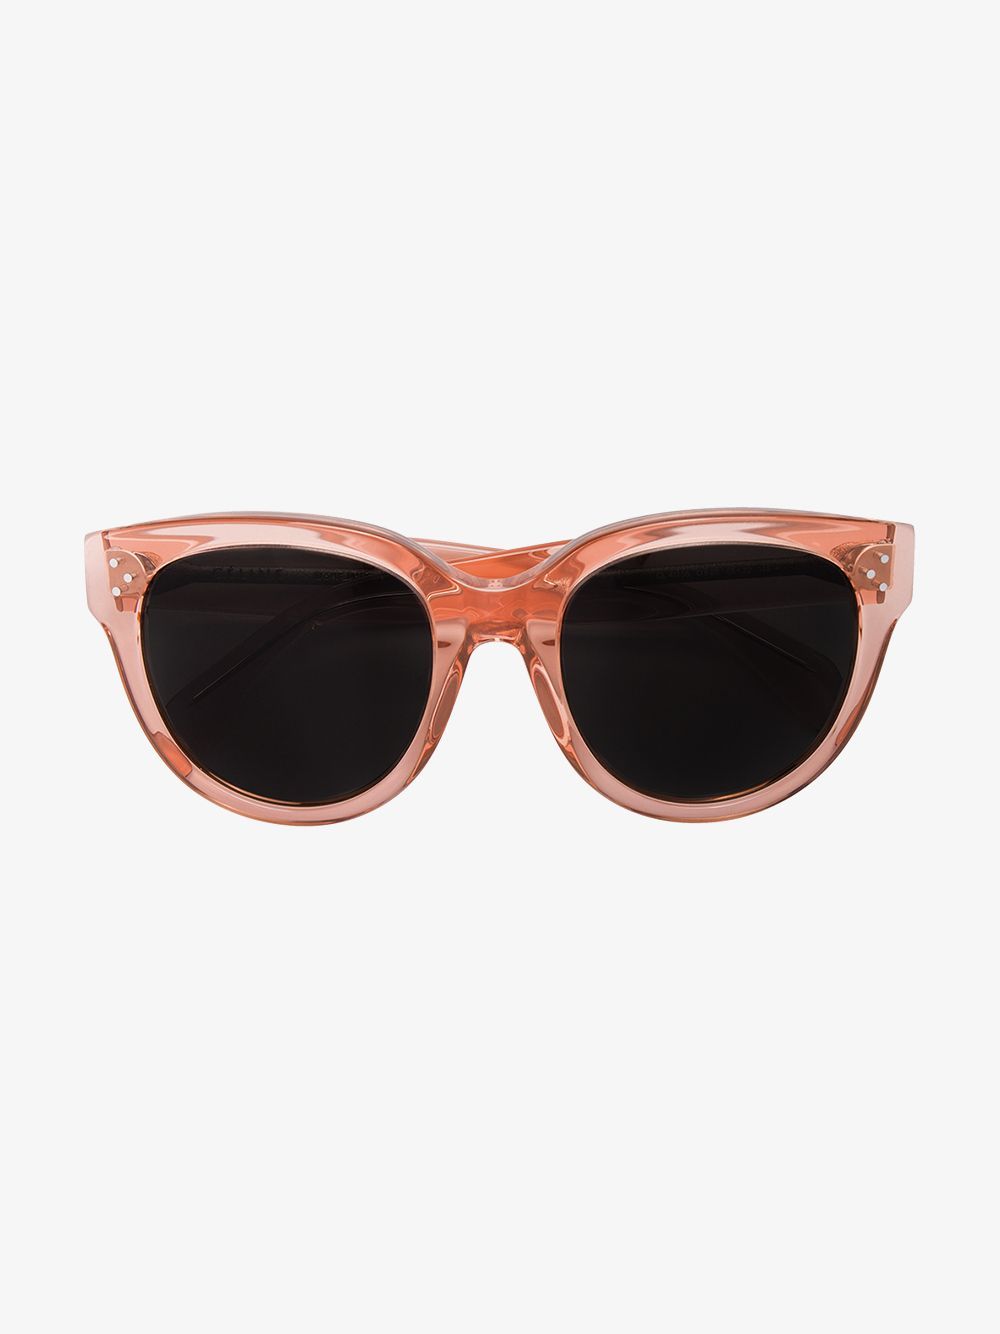 Céline Eyewear pink baby audrey sunglasses | Browns Fashion